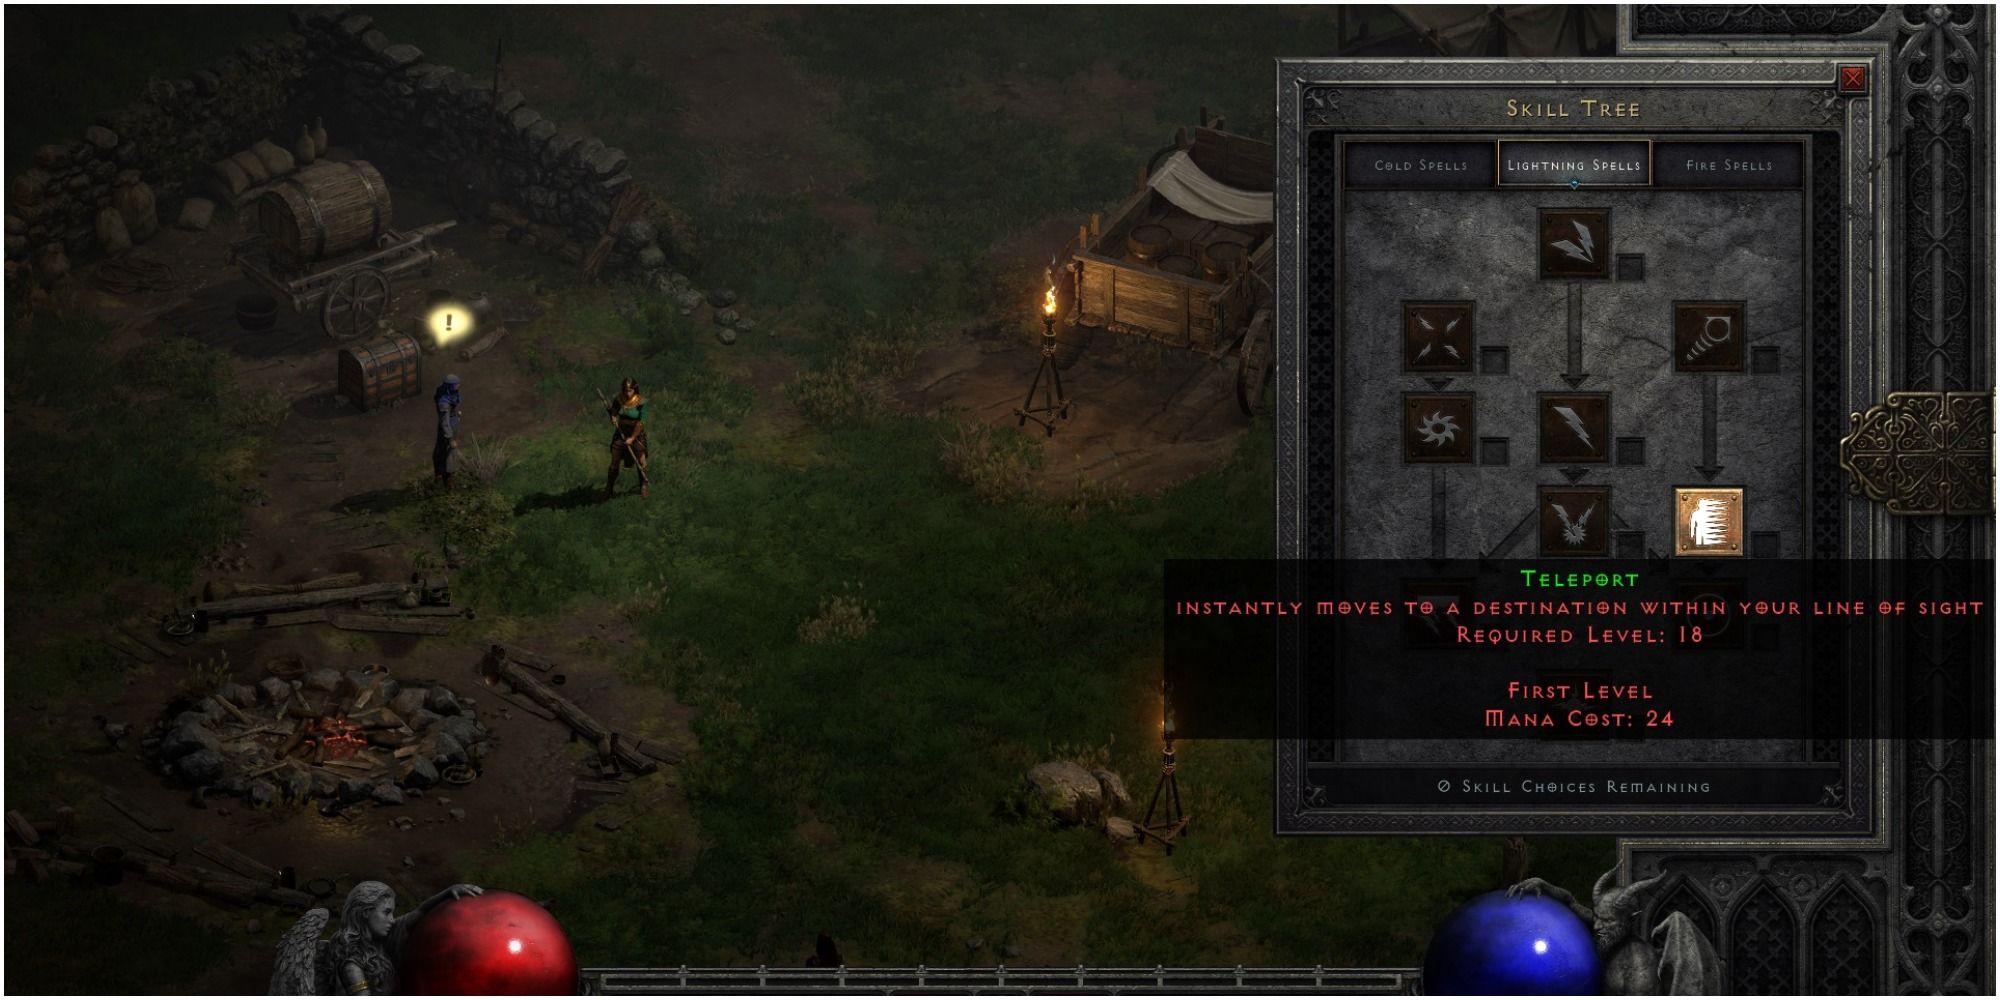 Diablo 2 Resurrected Teleport Description At Level One